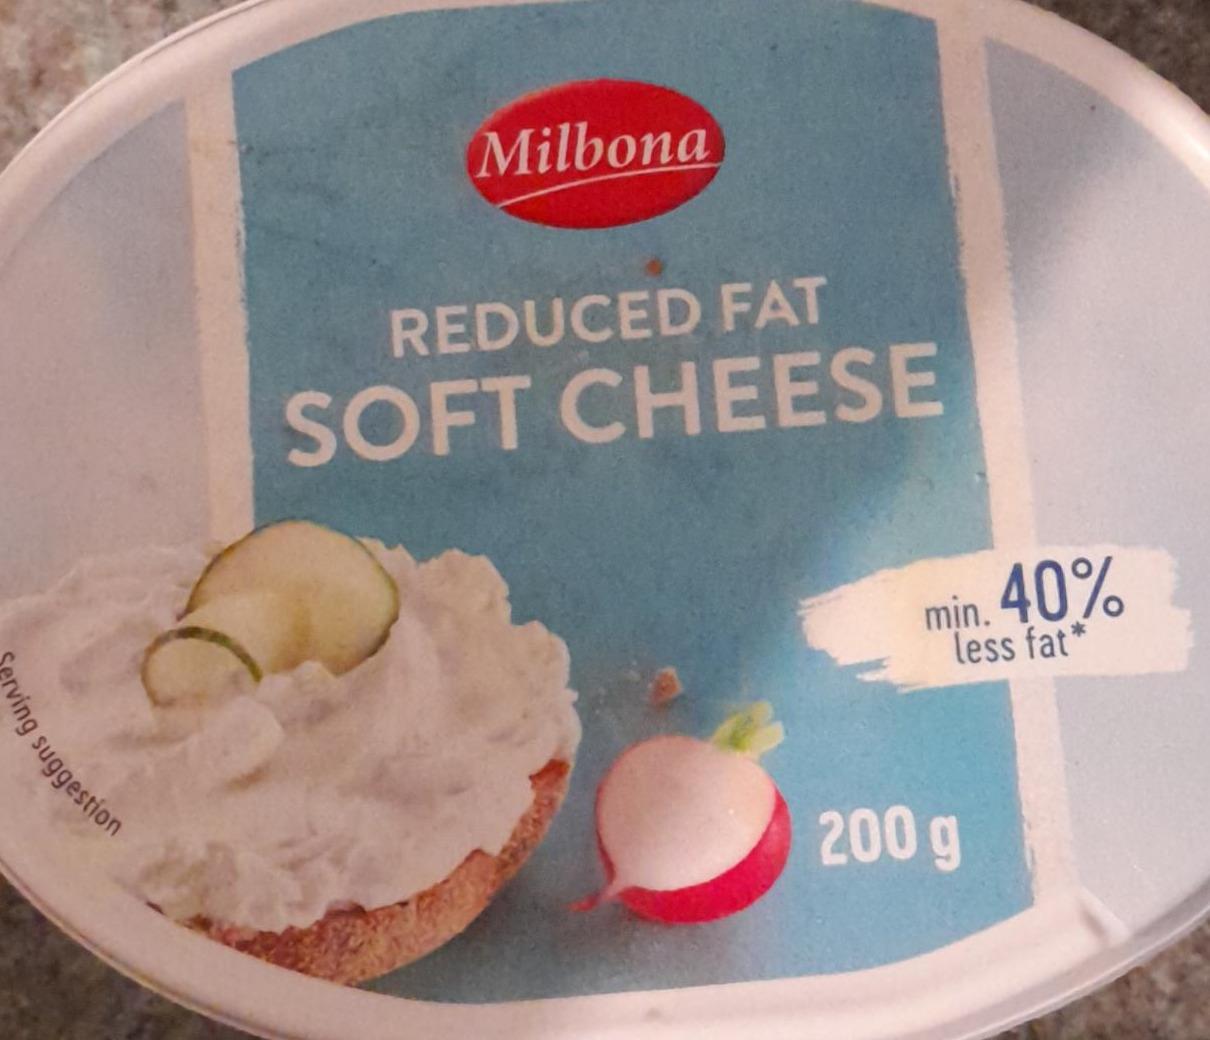 Zdjęcia - Reduced fat soft cheese Milbona